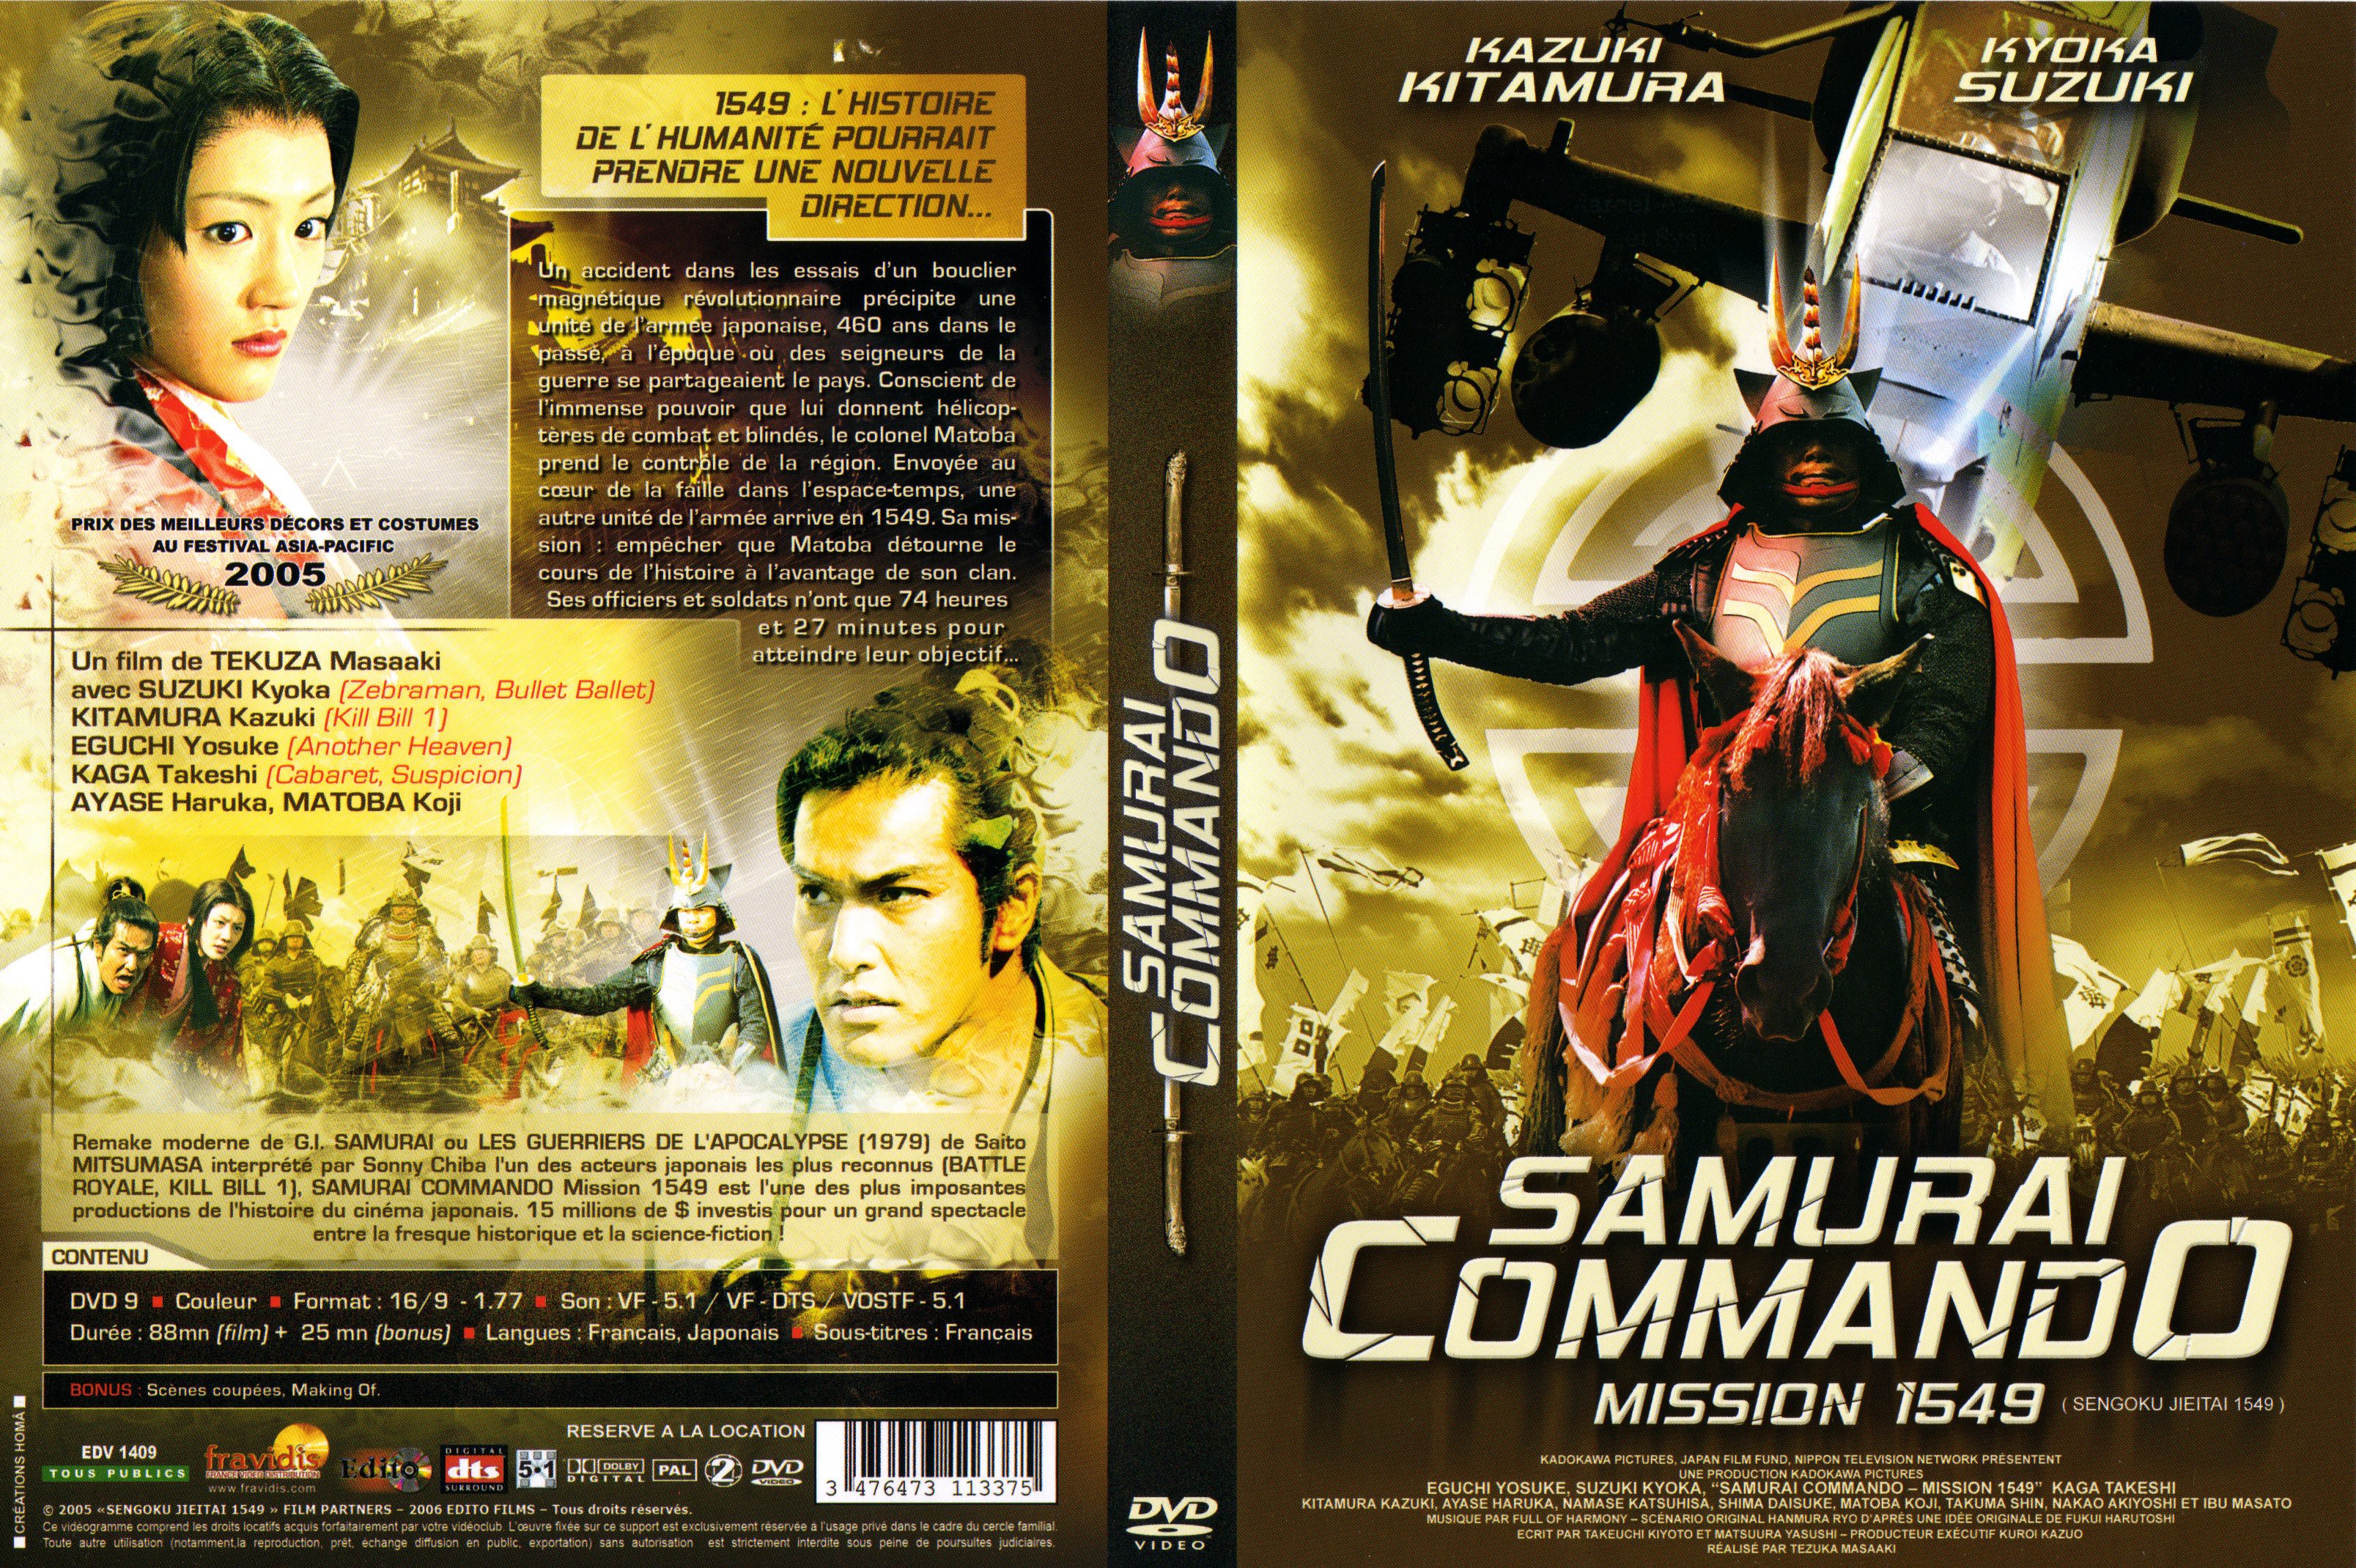 Jaquette DVD Samurai commando